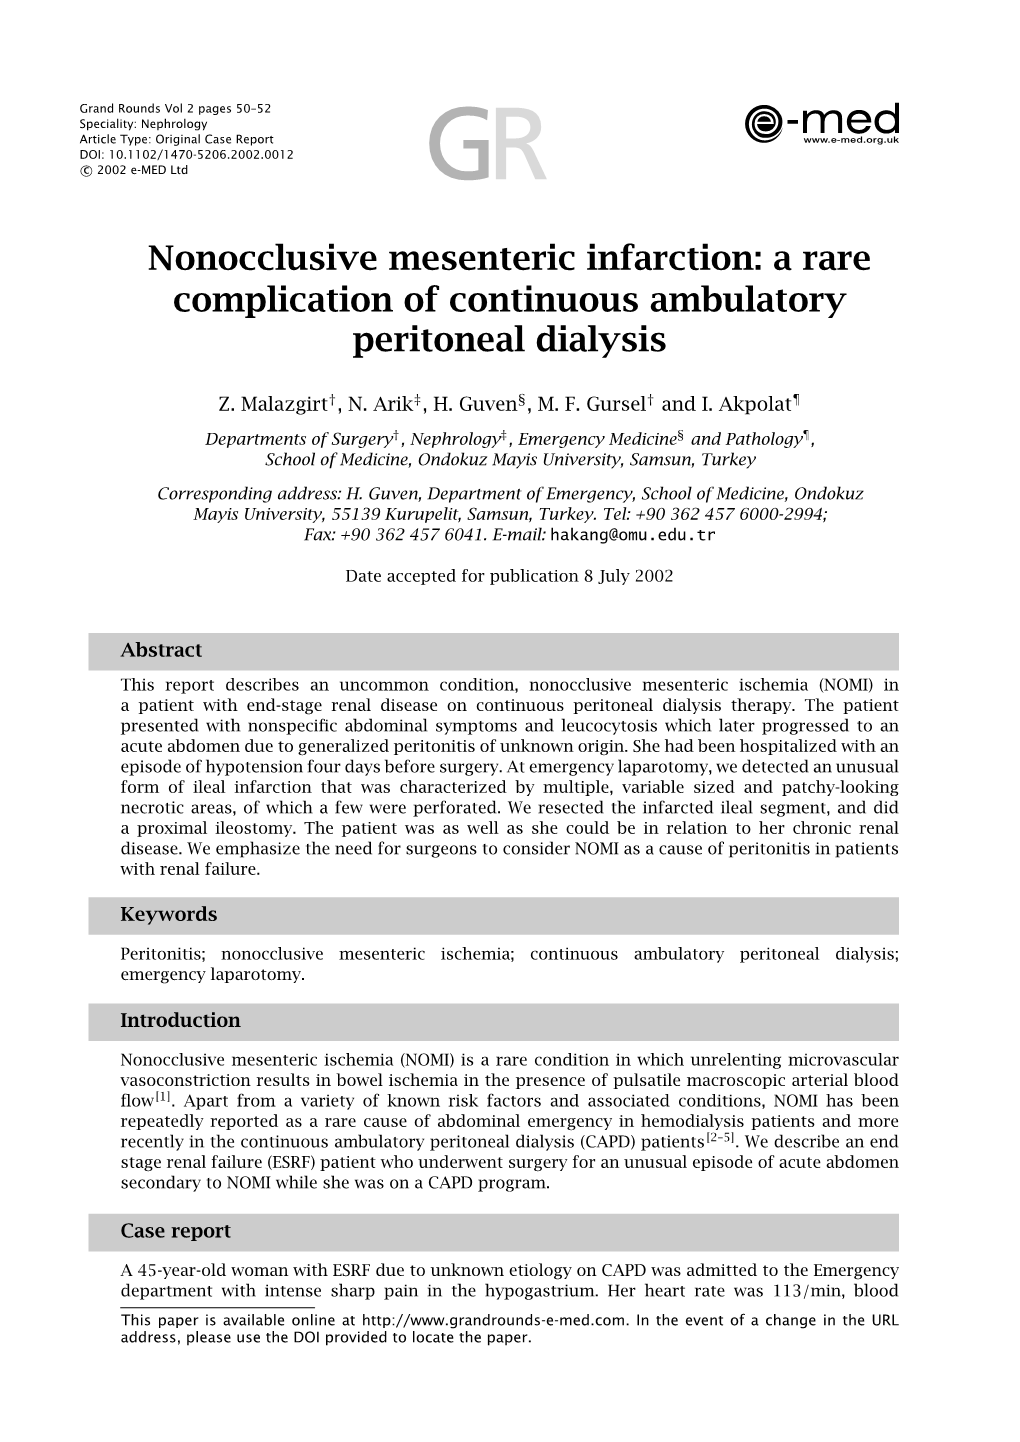 Nonocclusive Mesenteric Infarction: a Rare Complication of Continuous Ambulatory Peritoneal Dialysis